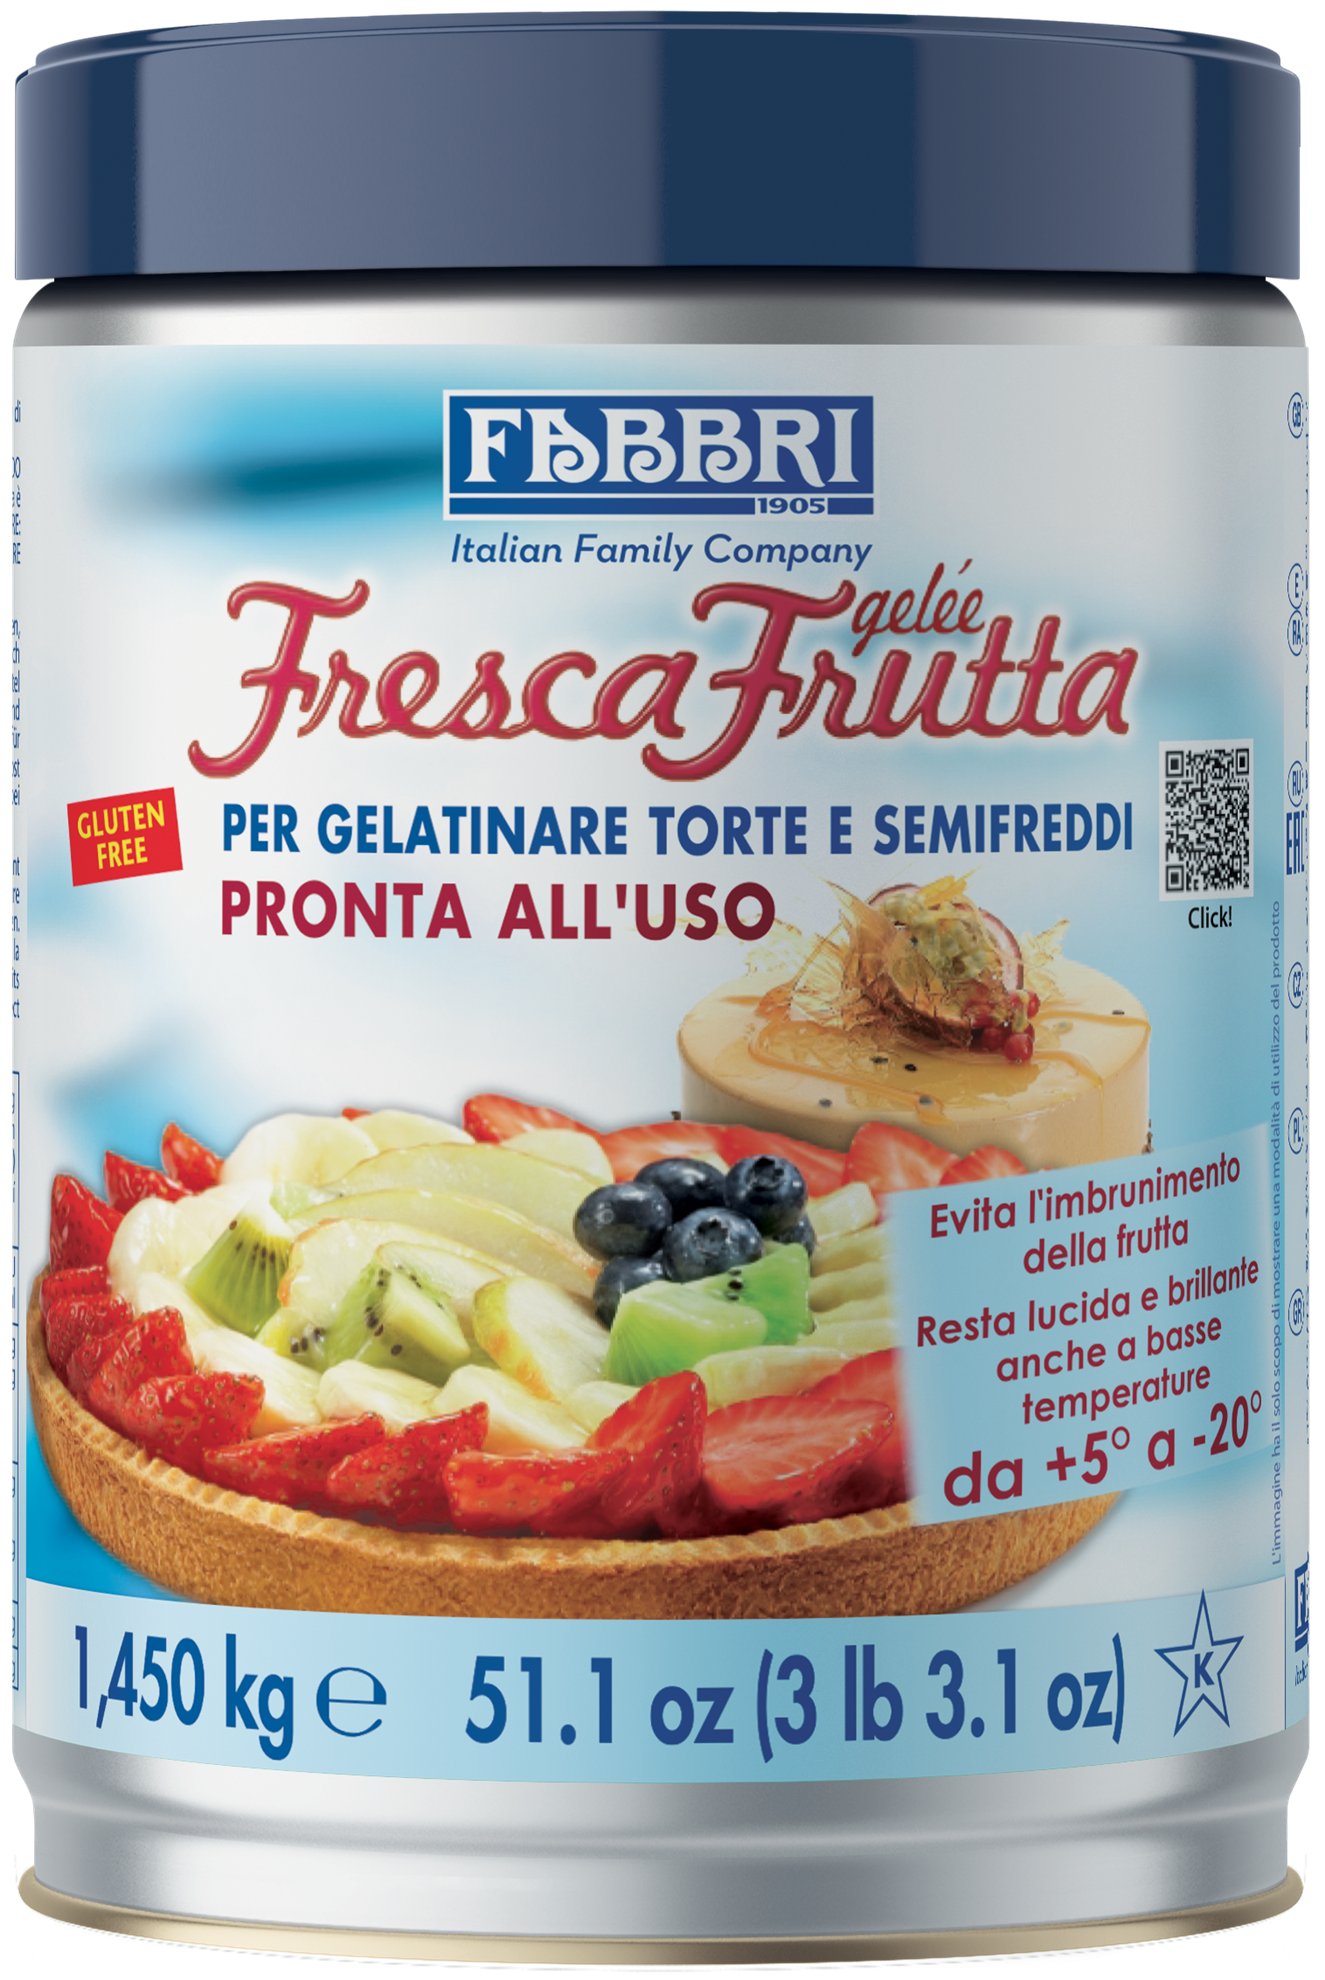 Fabbri 1905 – frescafrutta gelèe